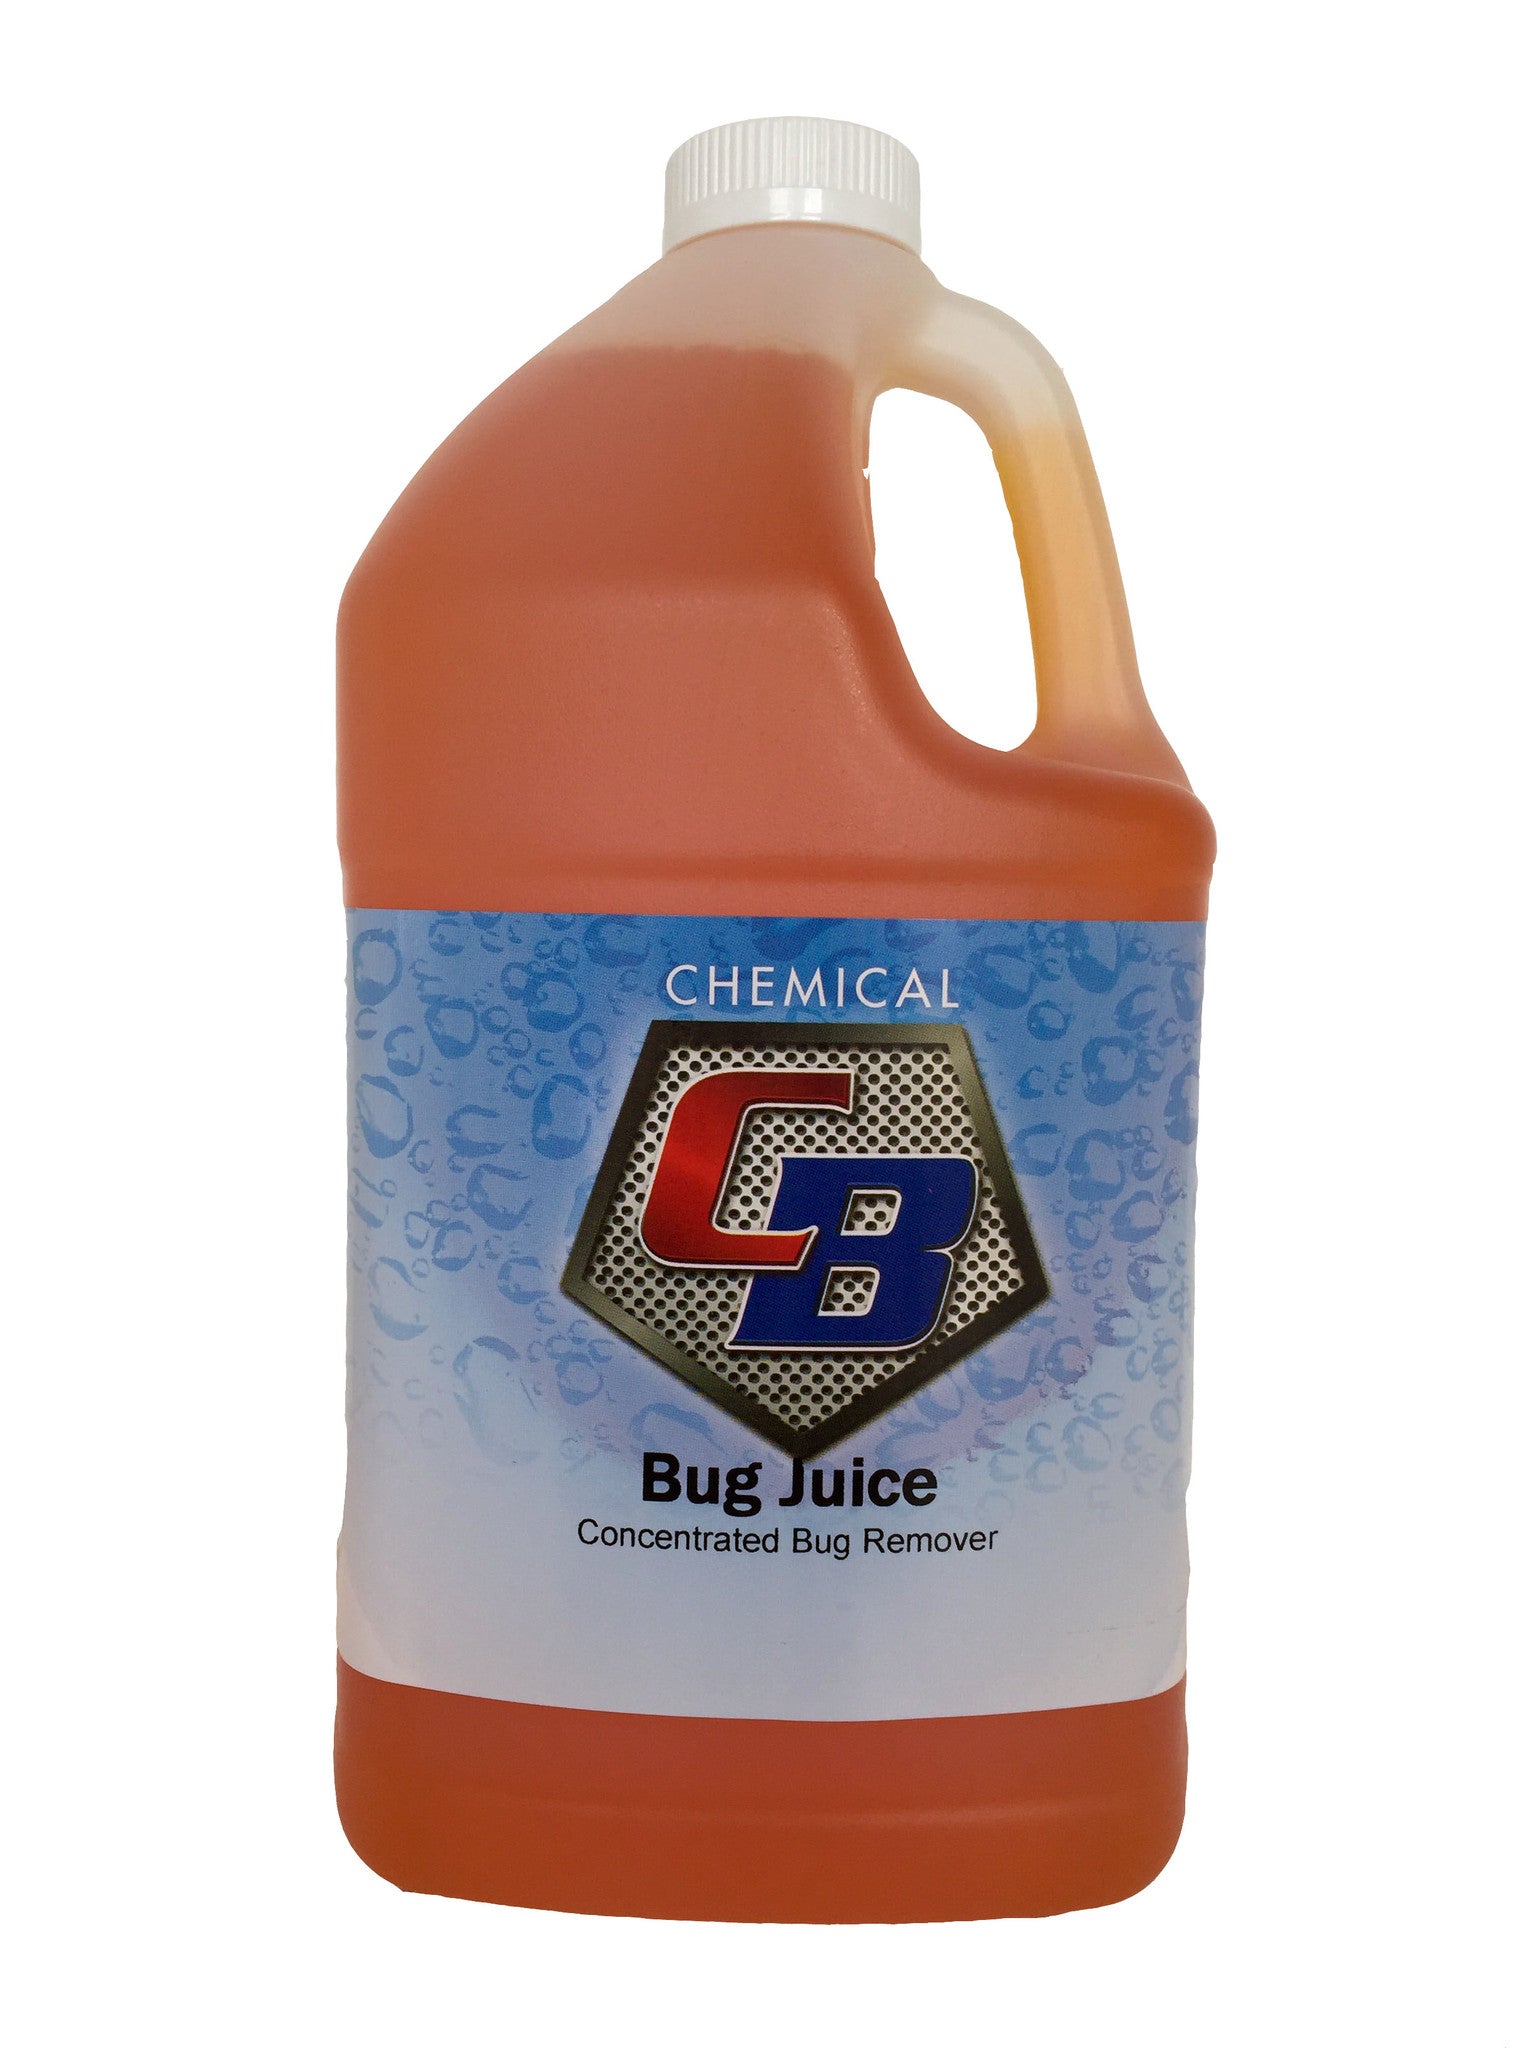 Bug Juice - C & B Chemical, Inc